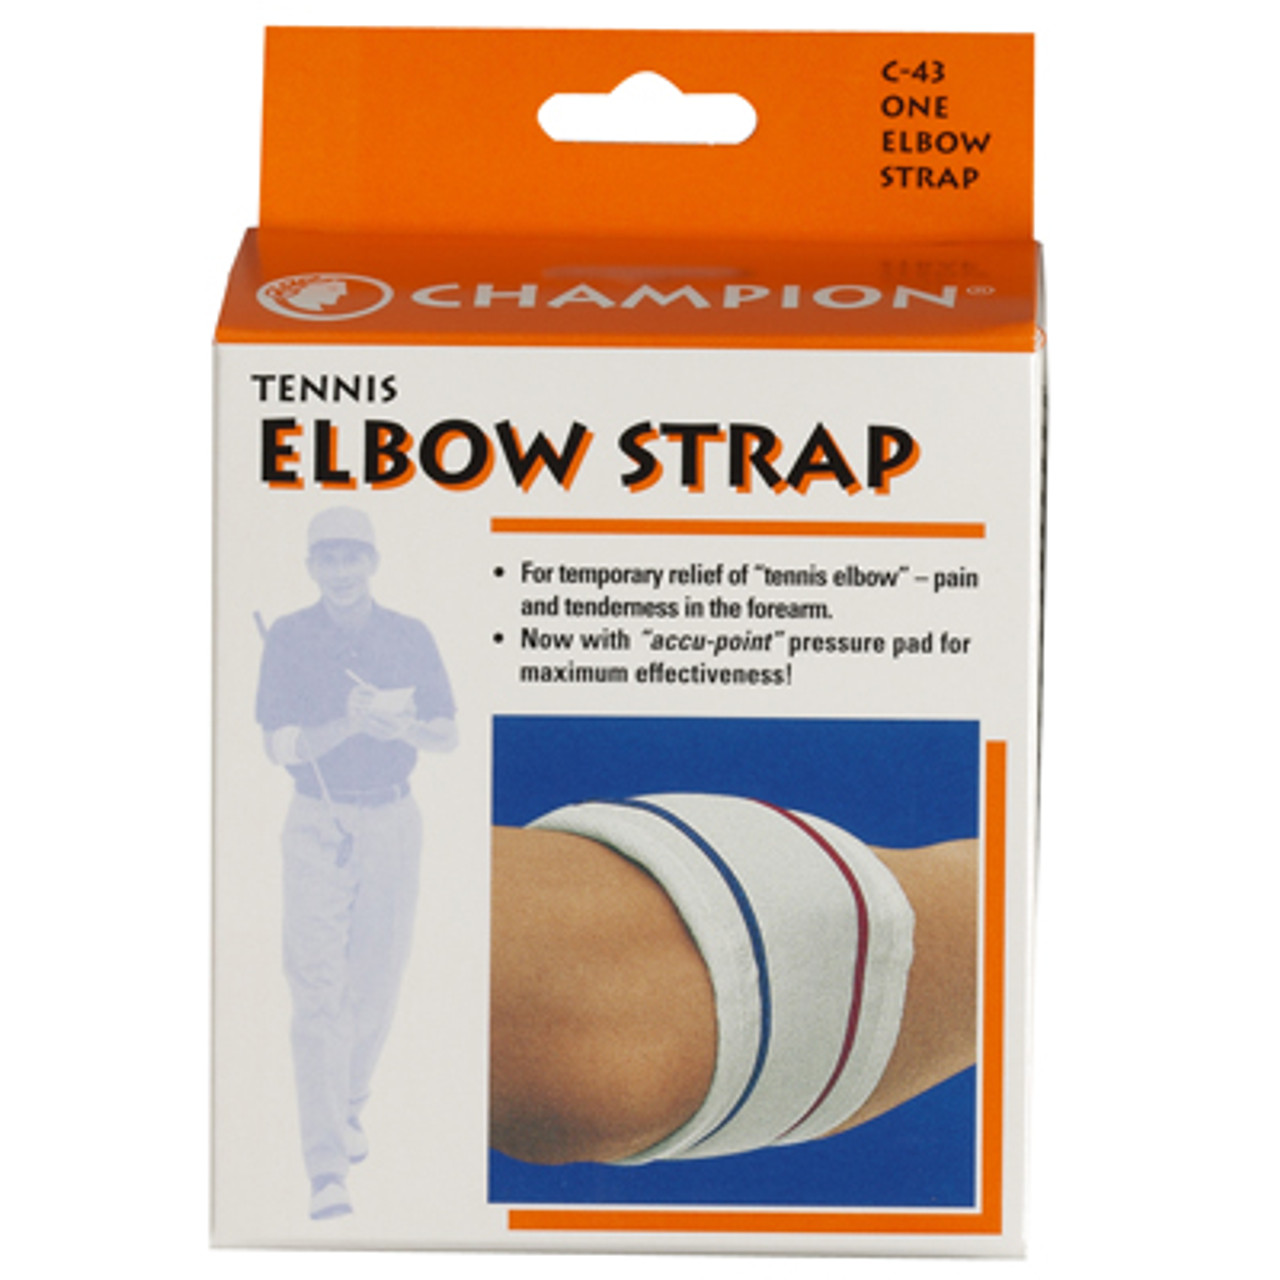 Elbow Strap for Tennis Elbow